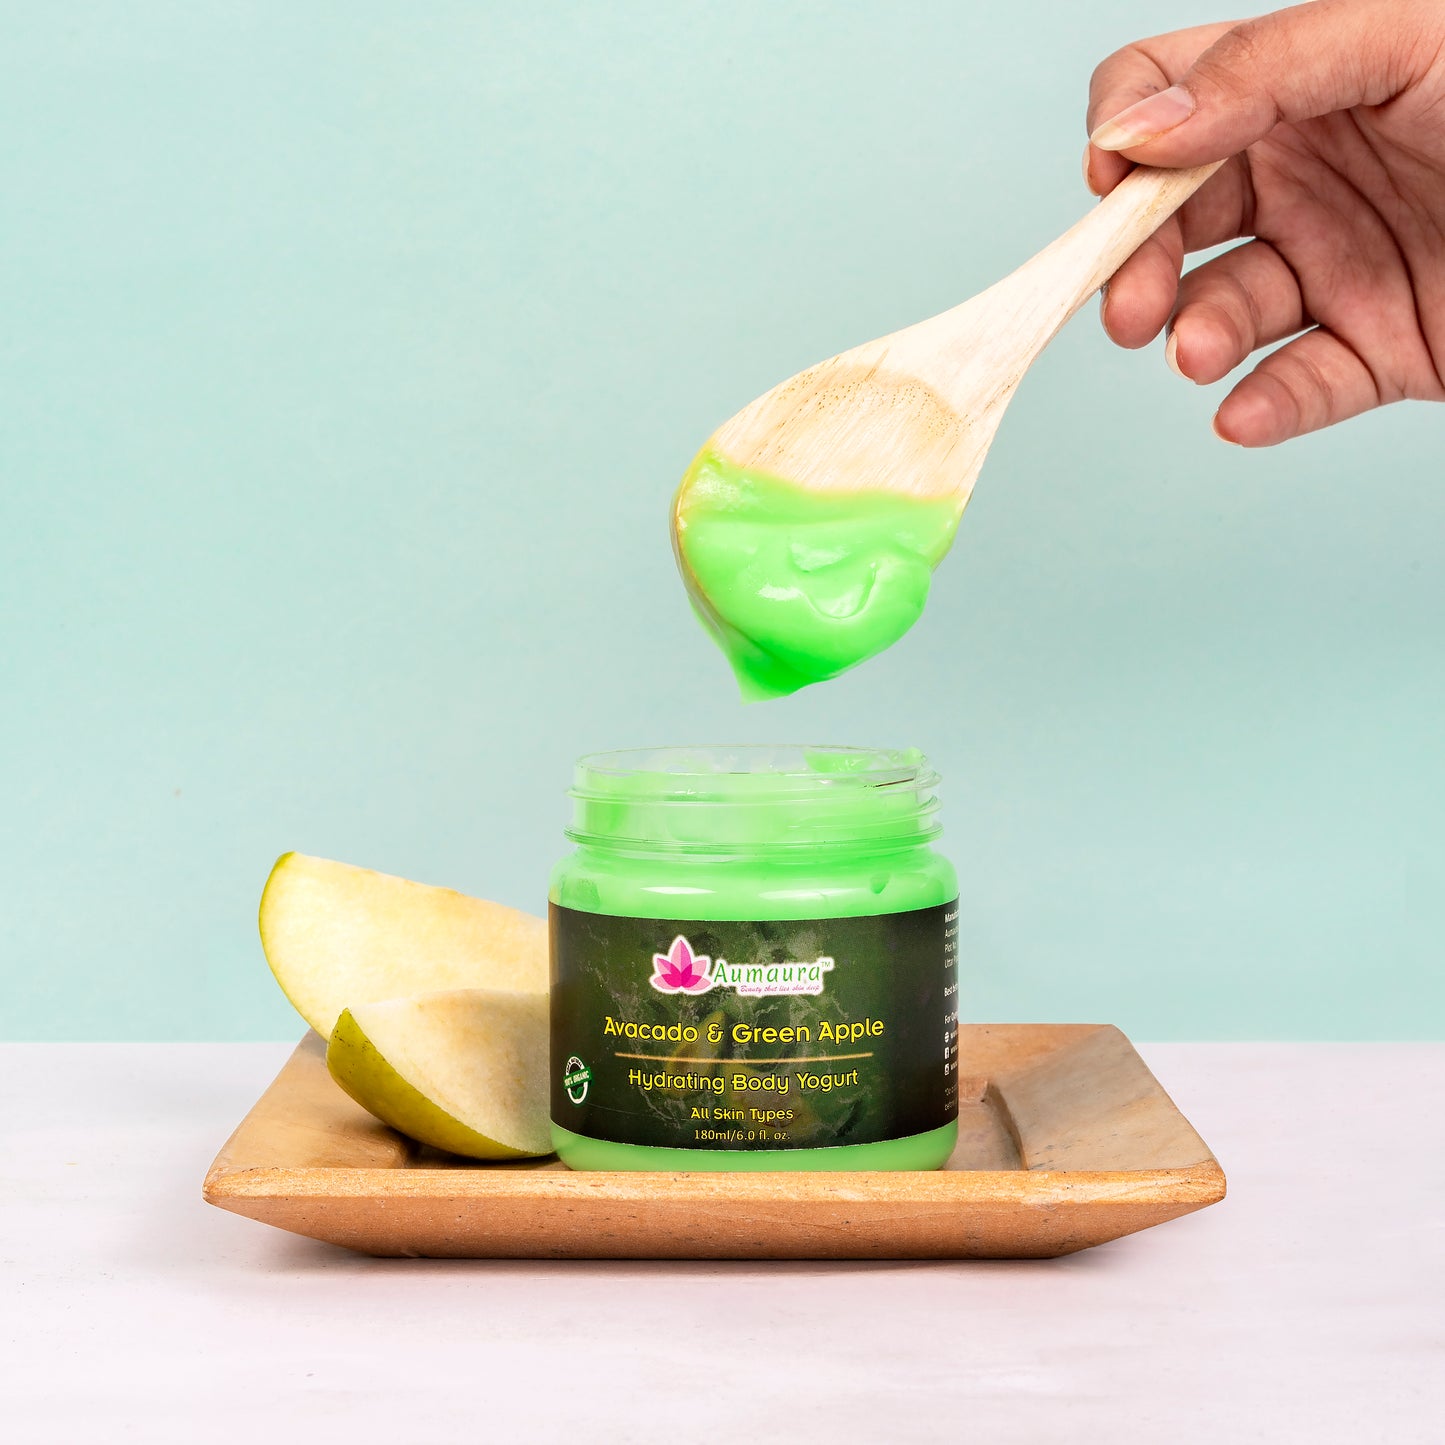 Avocado & Green Apple Body Yogurt